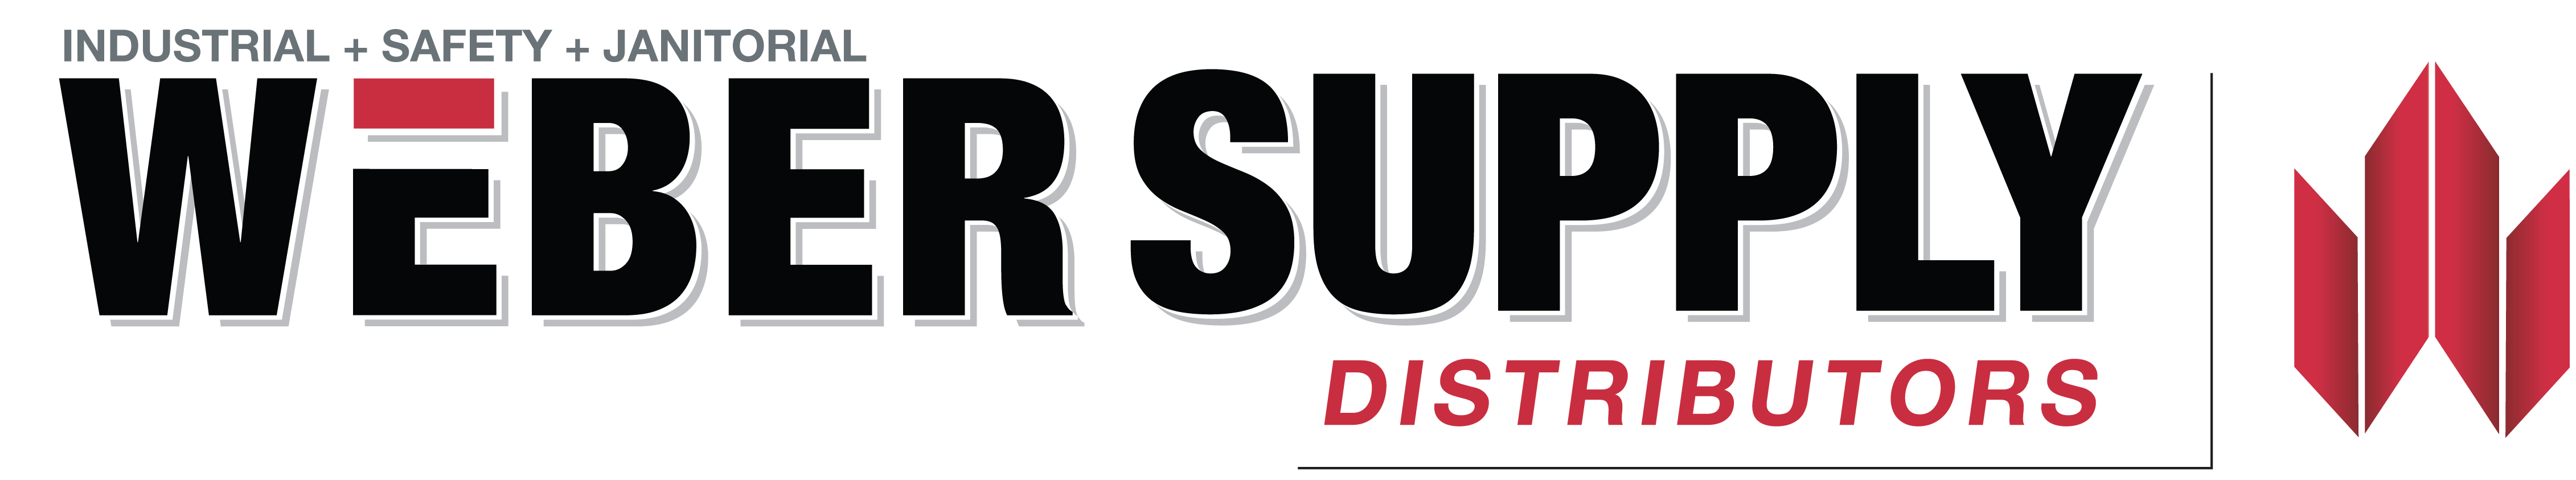 Weber Supply Distributor Logo